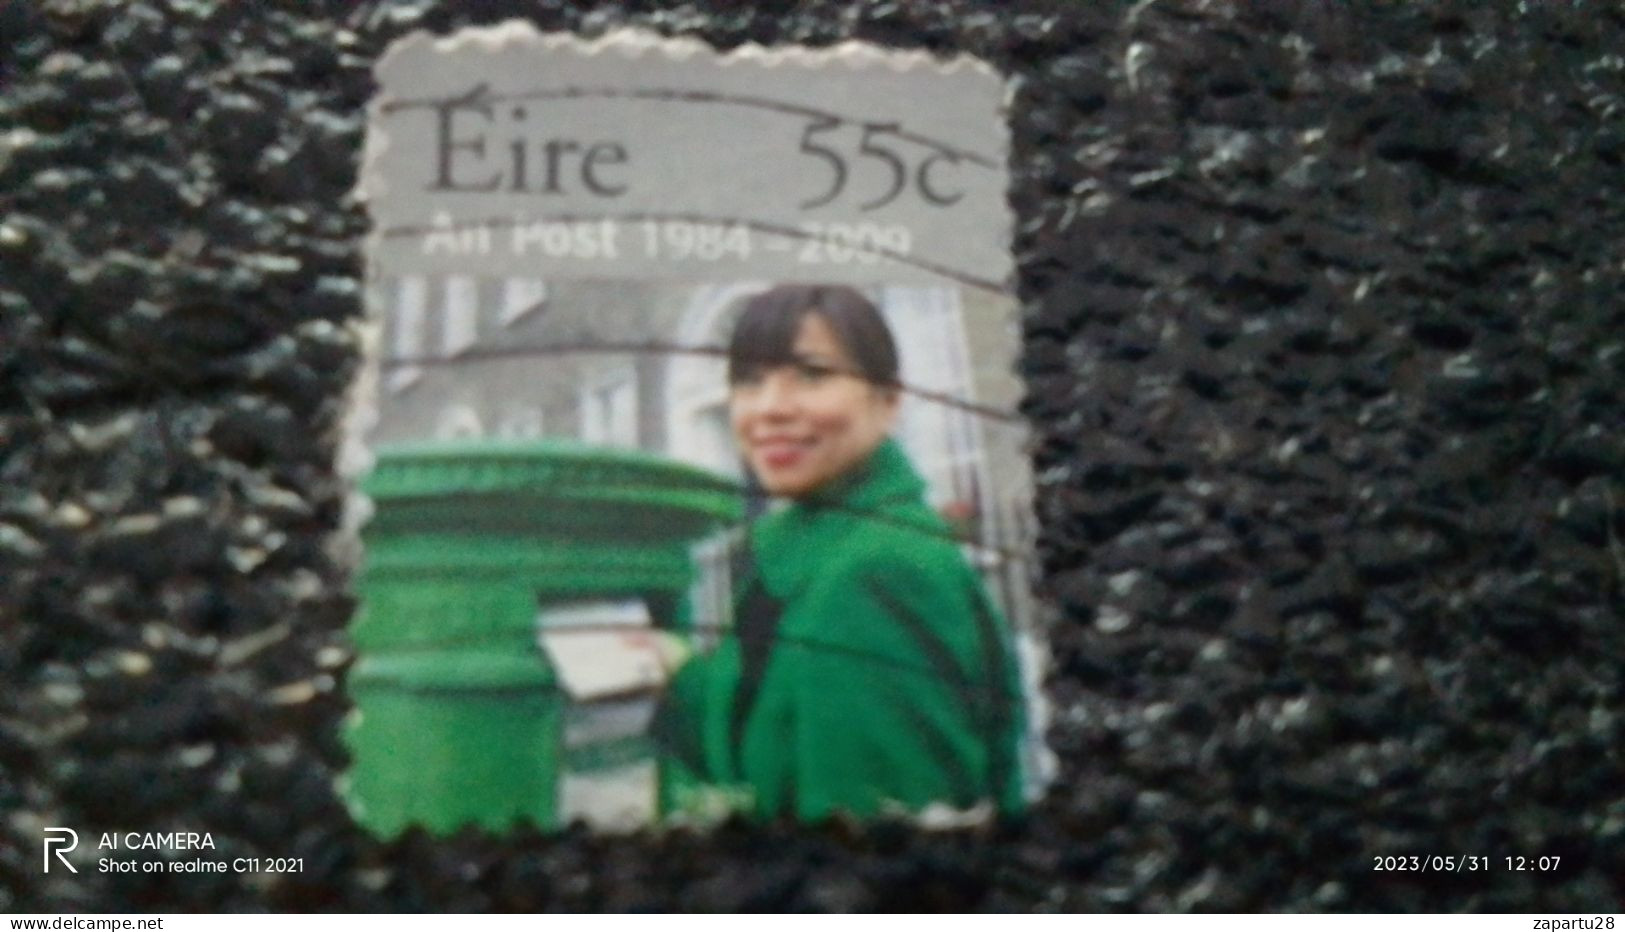 IRLANDA--2000-10     55C  USED - Used Stamps